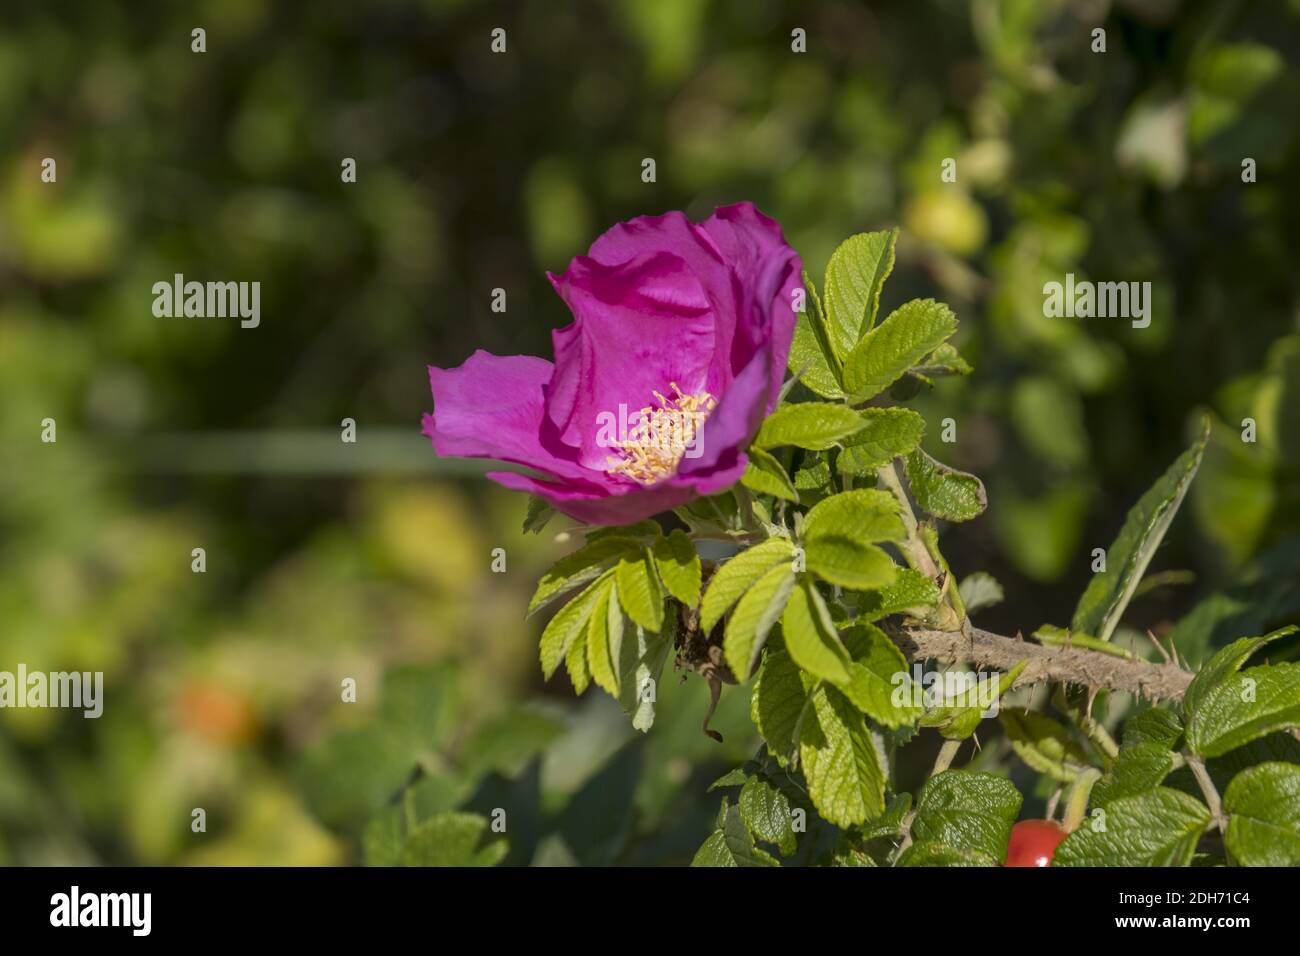 Flower of the potato rose (Rosa rugosa) Stock Photo